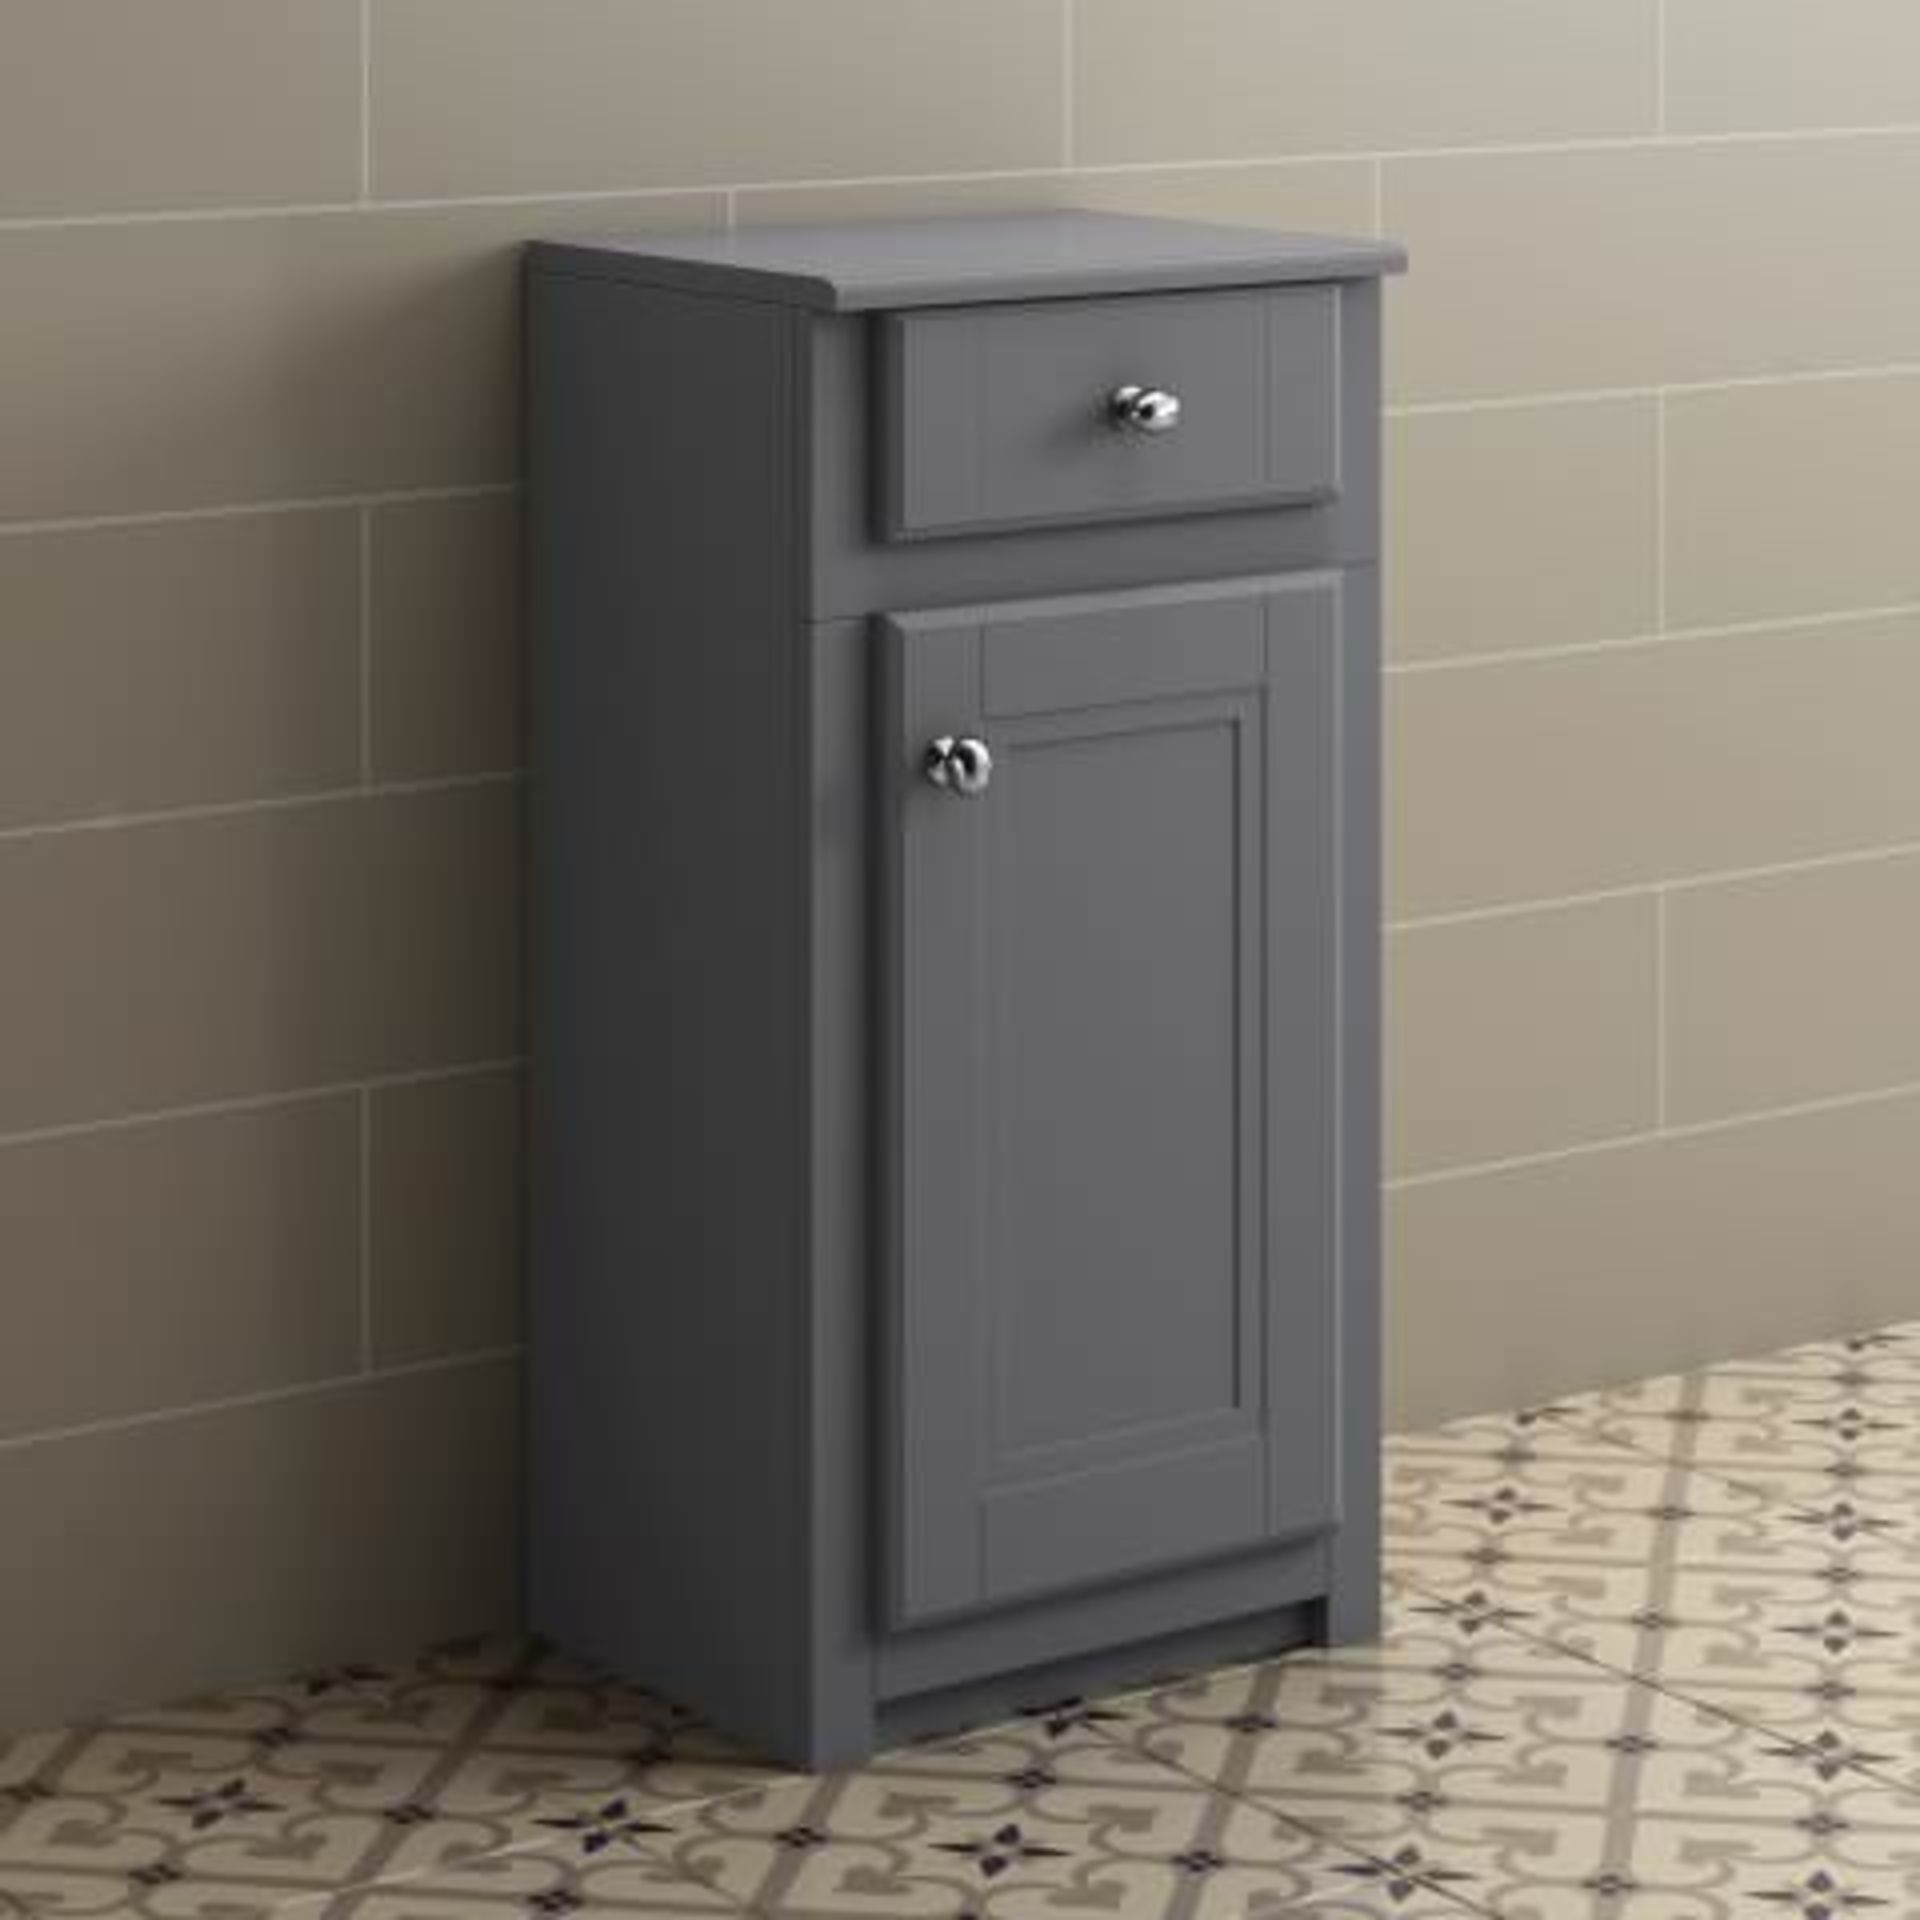 (W277) Cambridge Storage Cabinet - Midnight Grey RRP £299.99 This exquisite Midnight grey cabinet